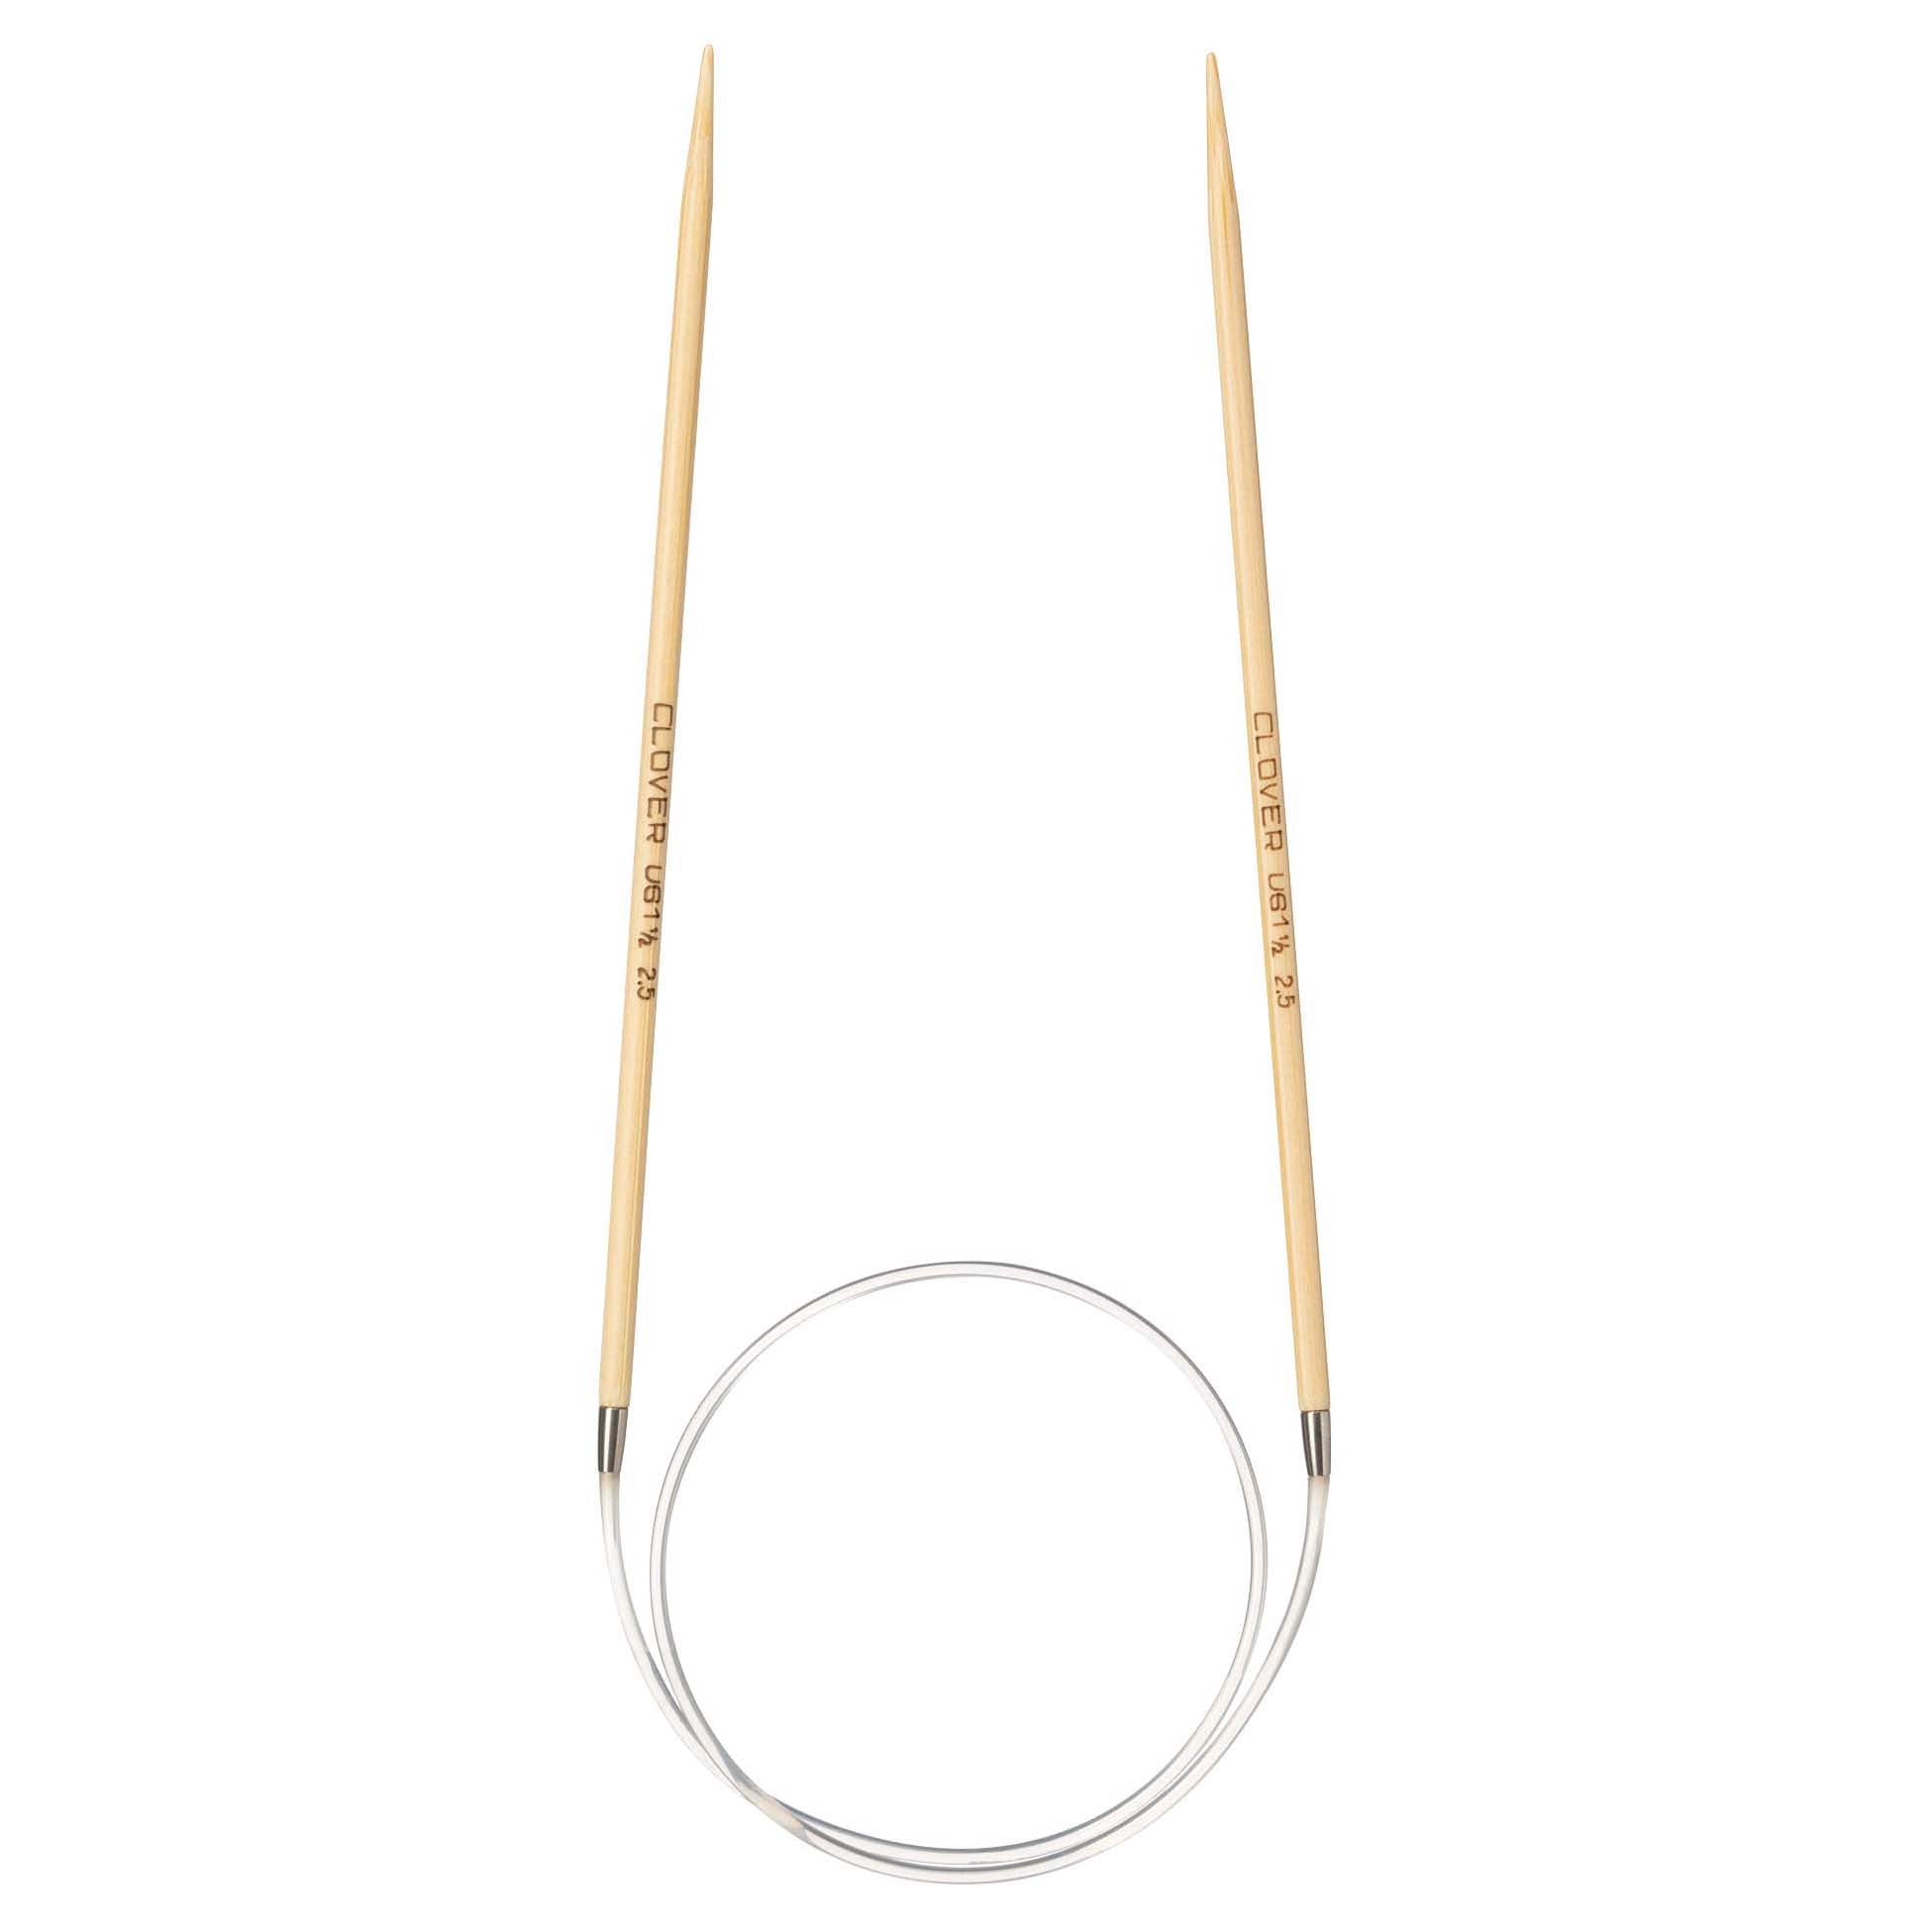 Takumi Bamboo Interchangeable Circular Knitting Needles-Size 8/5mm